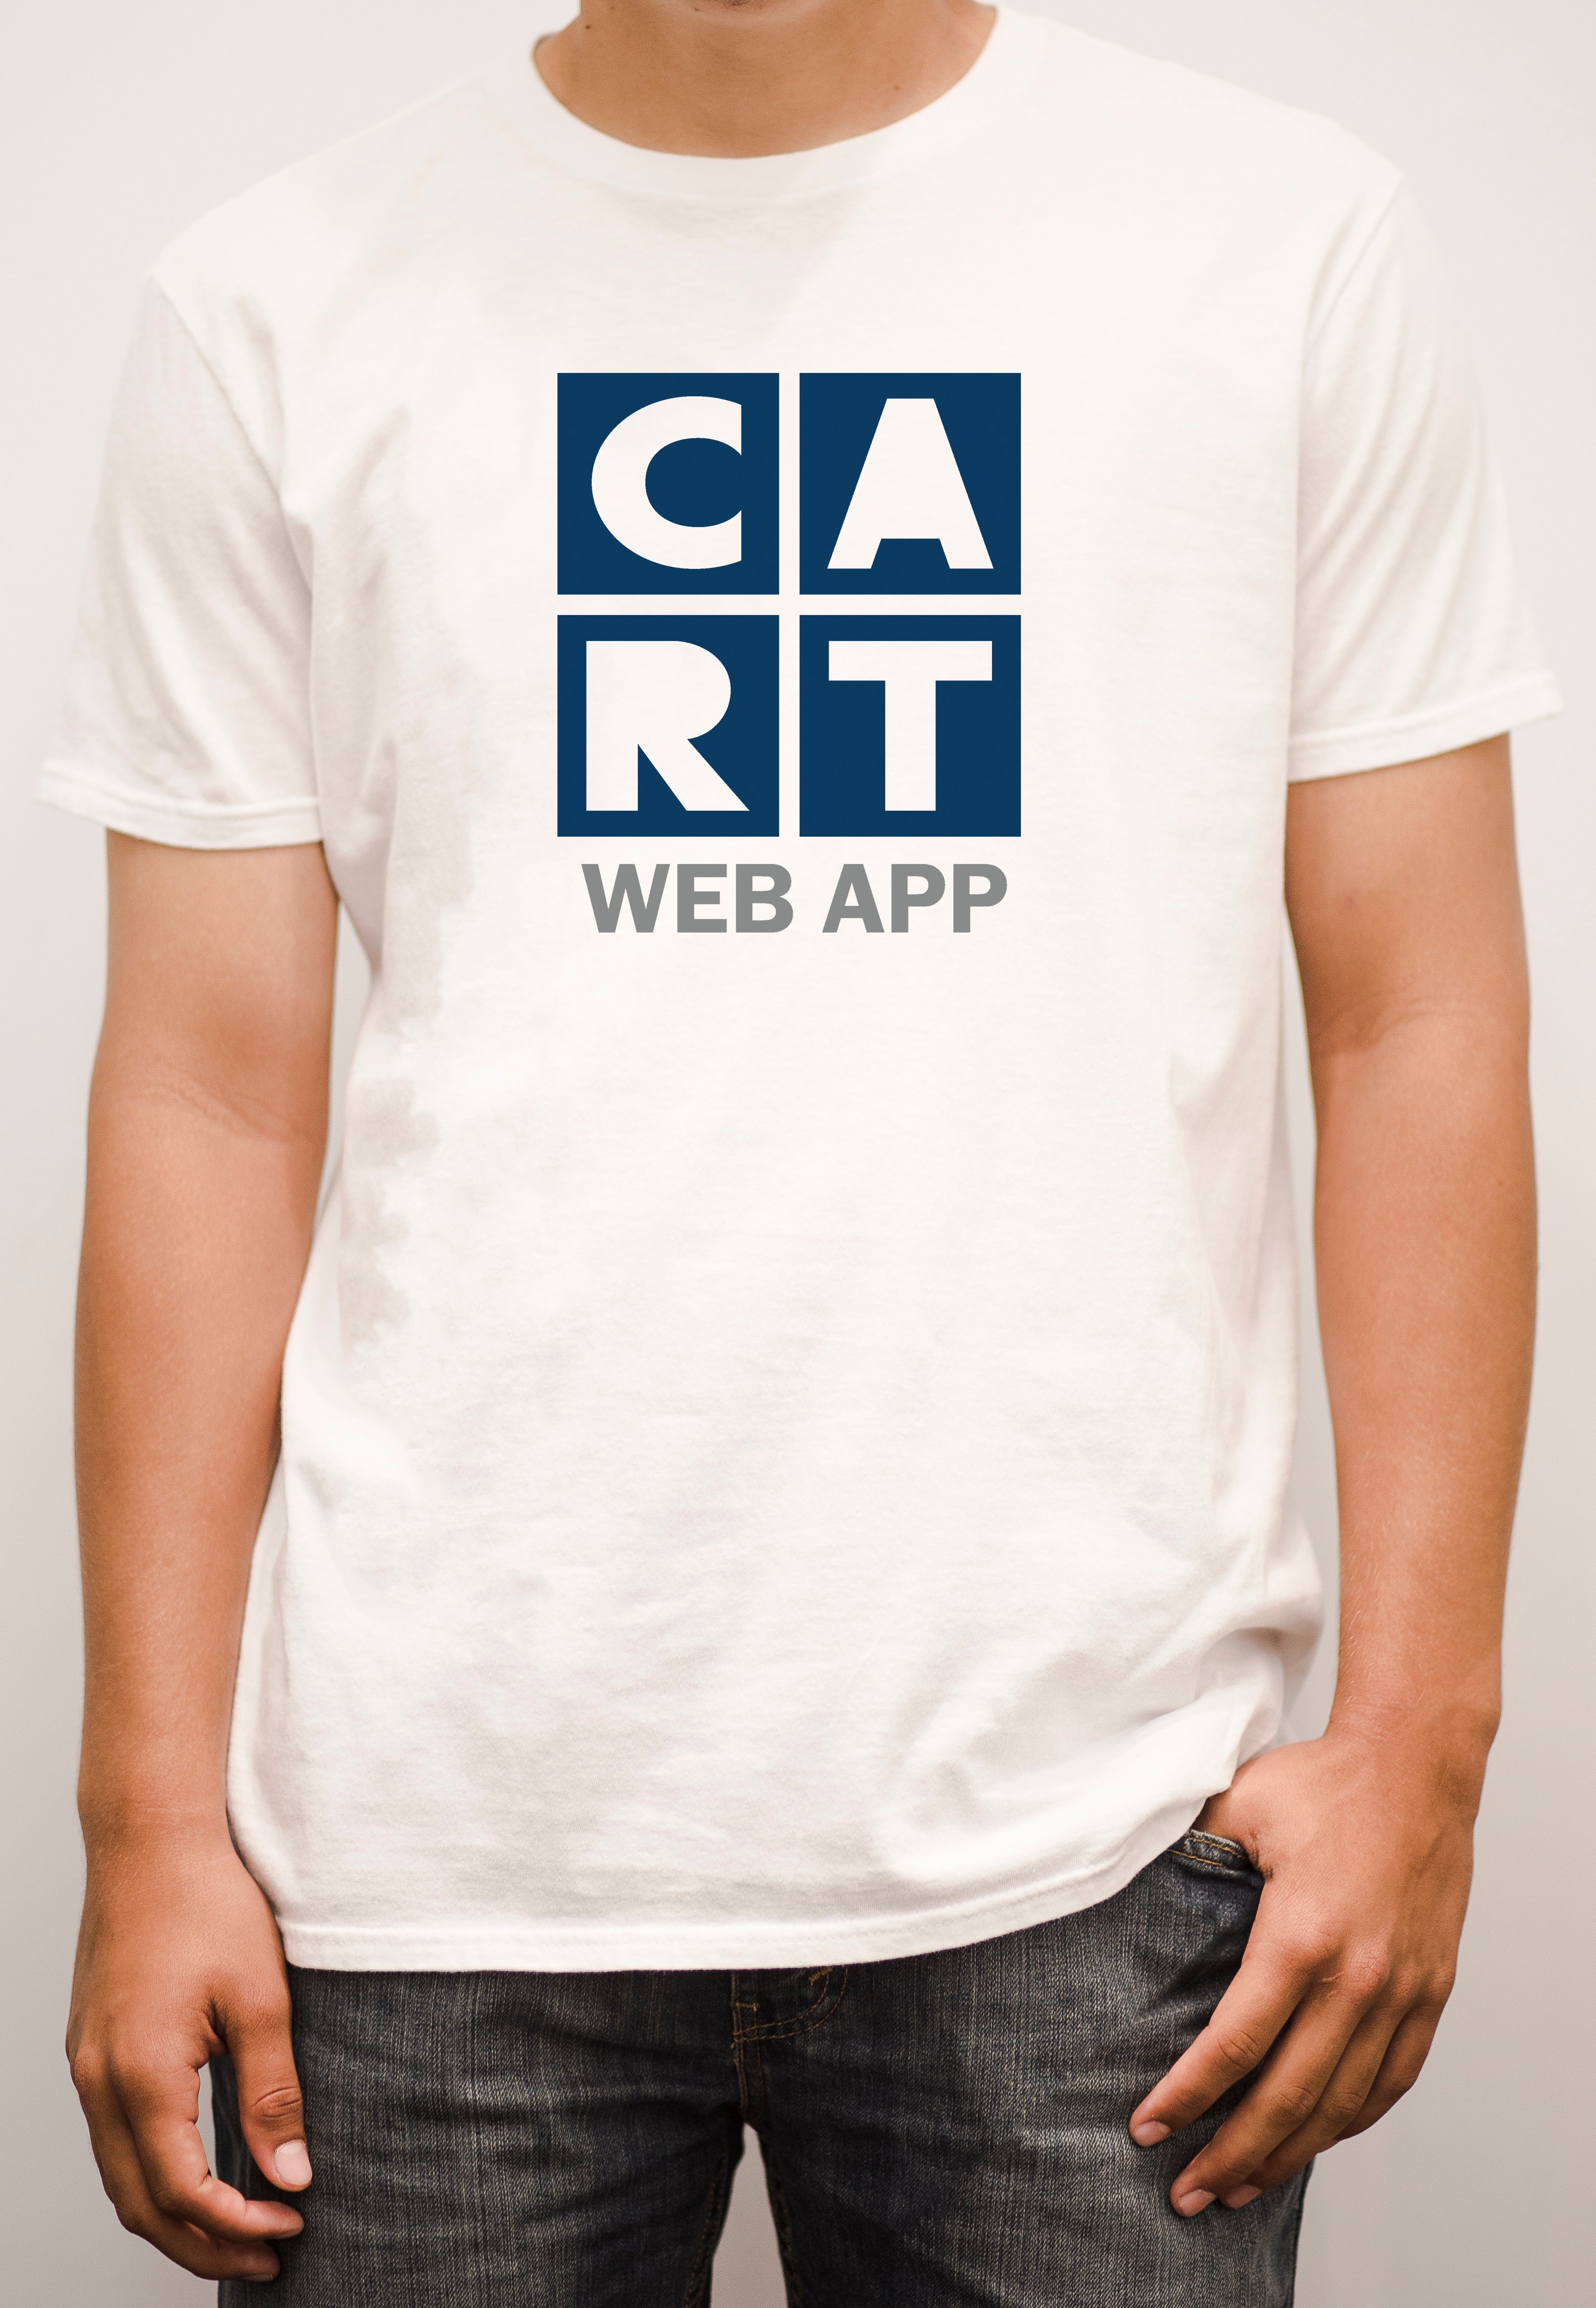 Short-Sleeve T-Shirt - Web App Grey/Blue